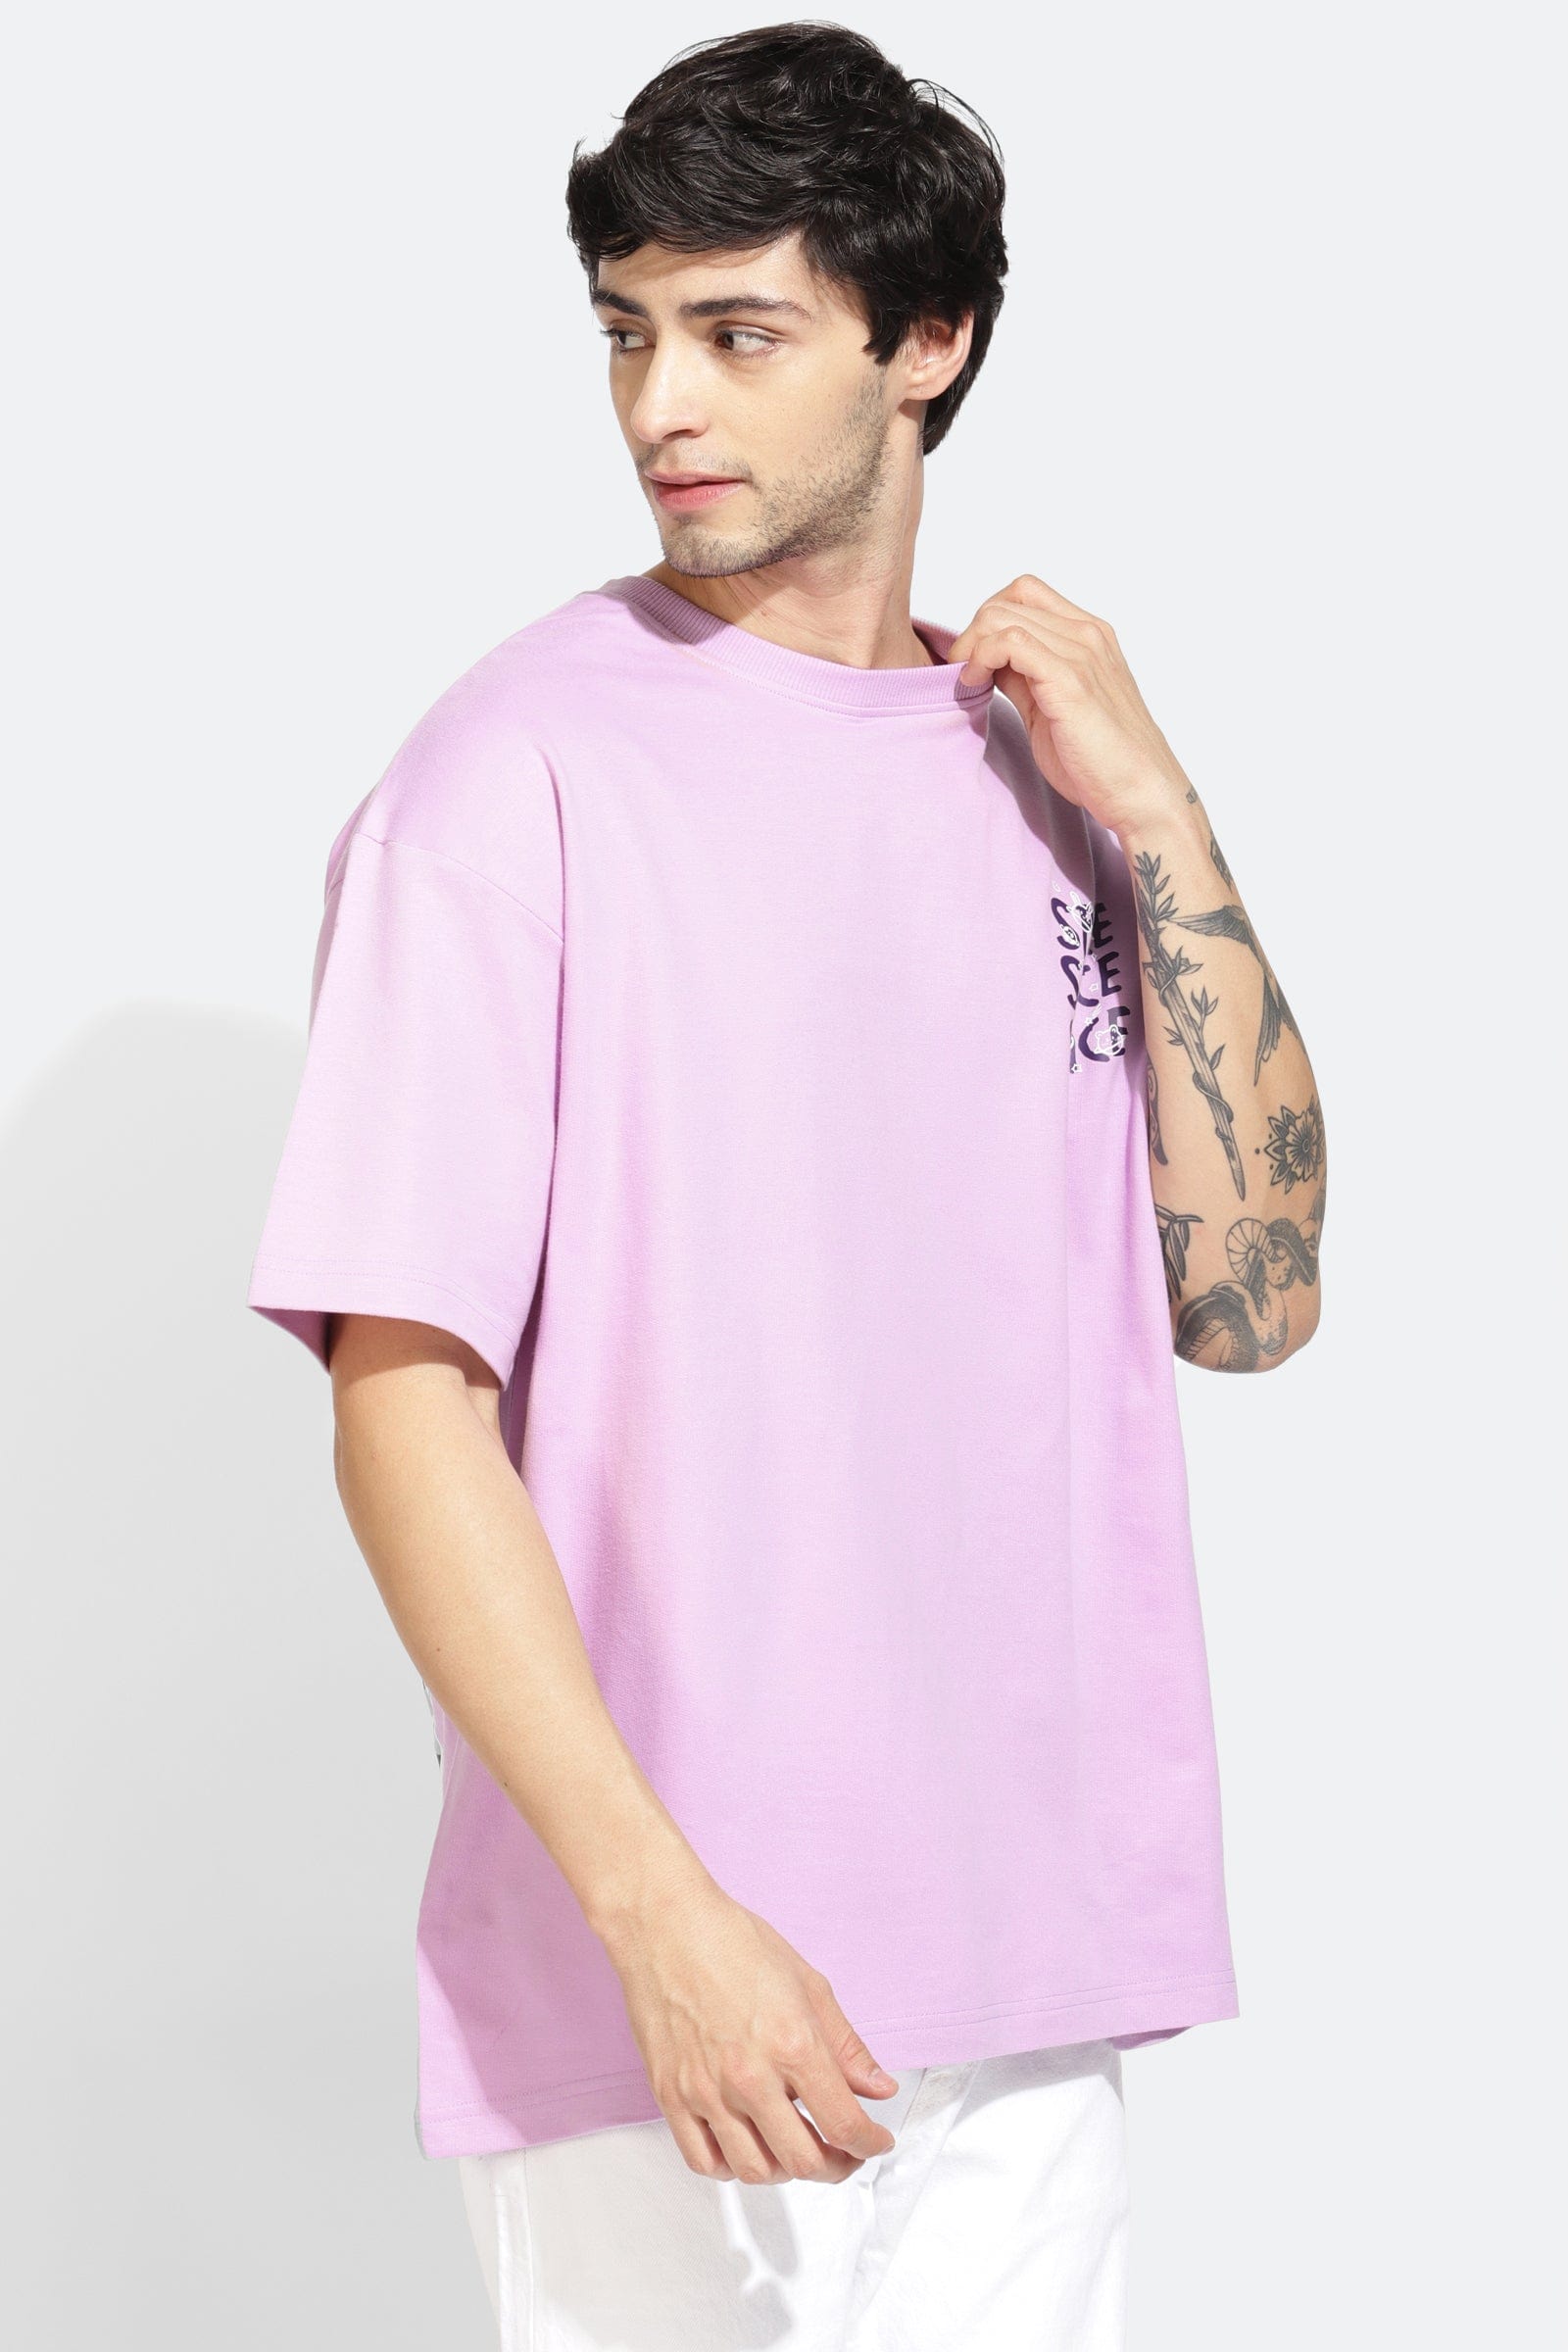 Space Lilac Oversized Unisex T-shirt By Purple Mango